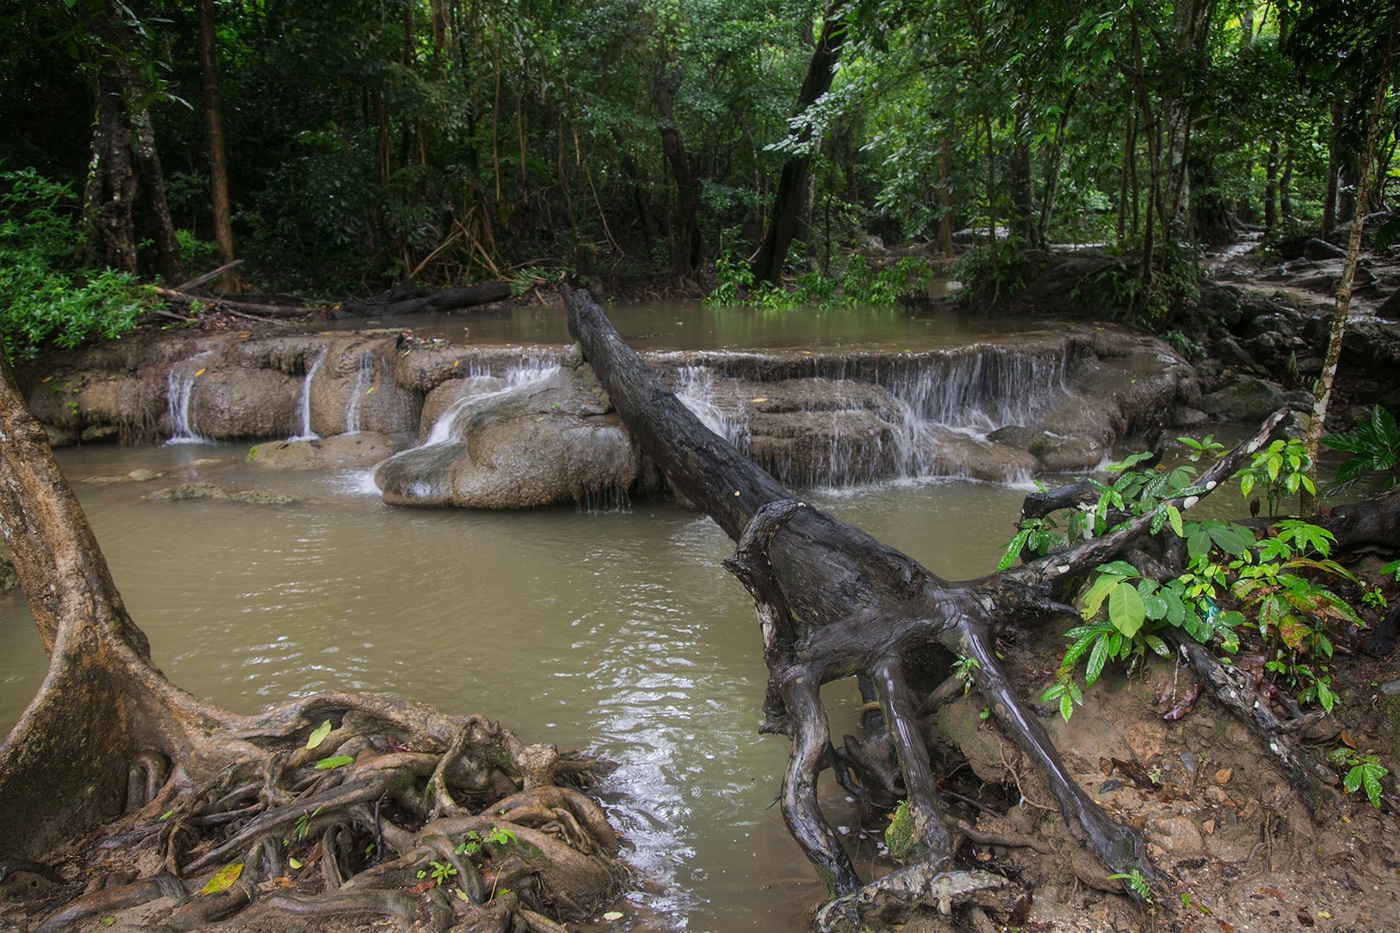 Jungle in Thailand